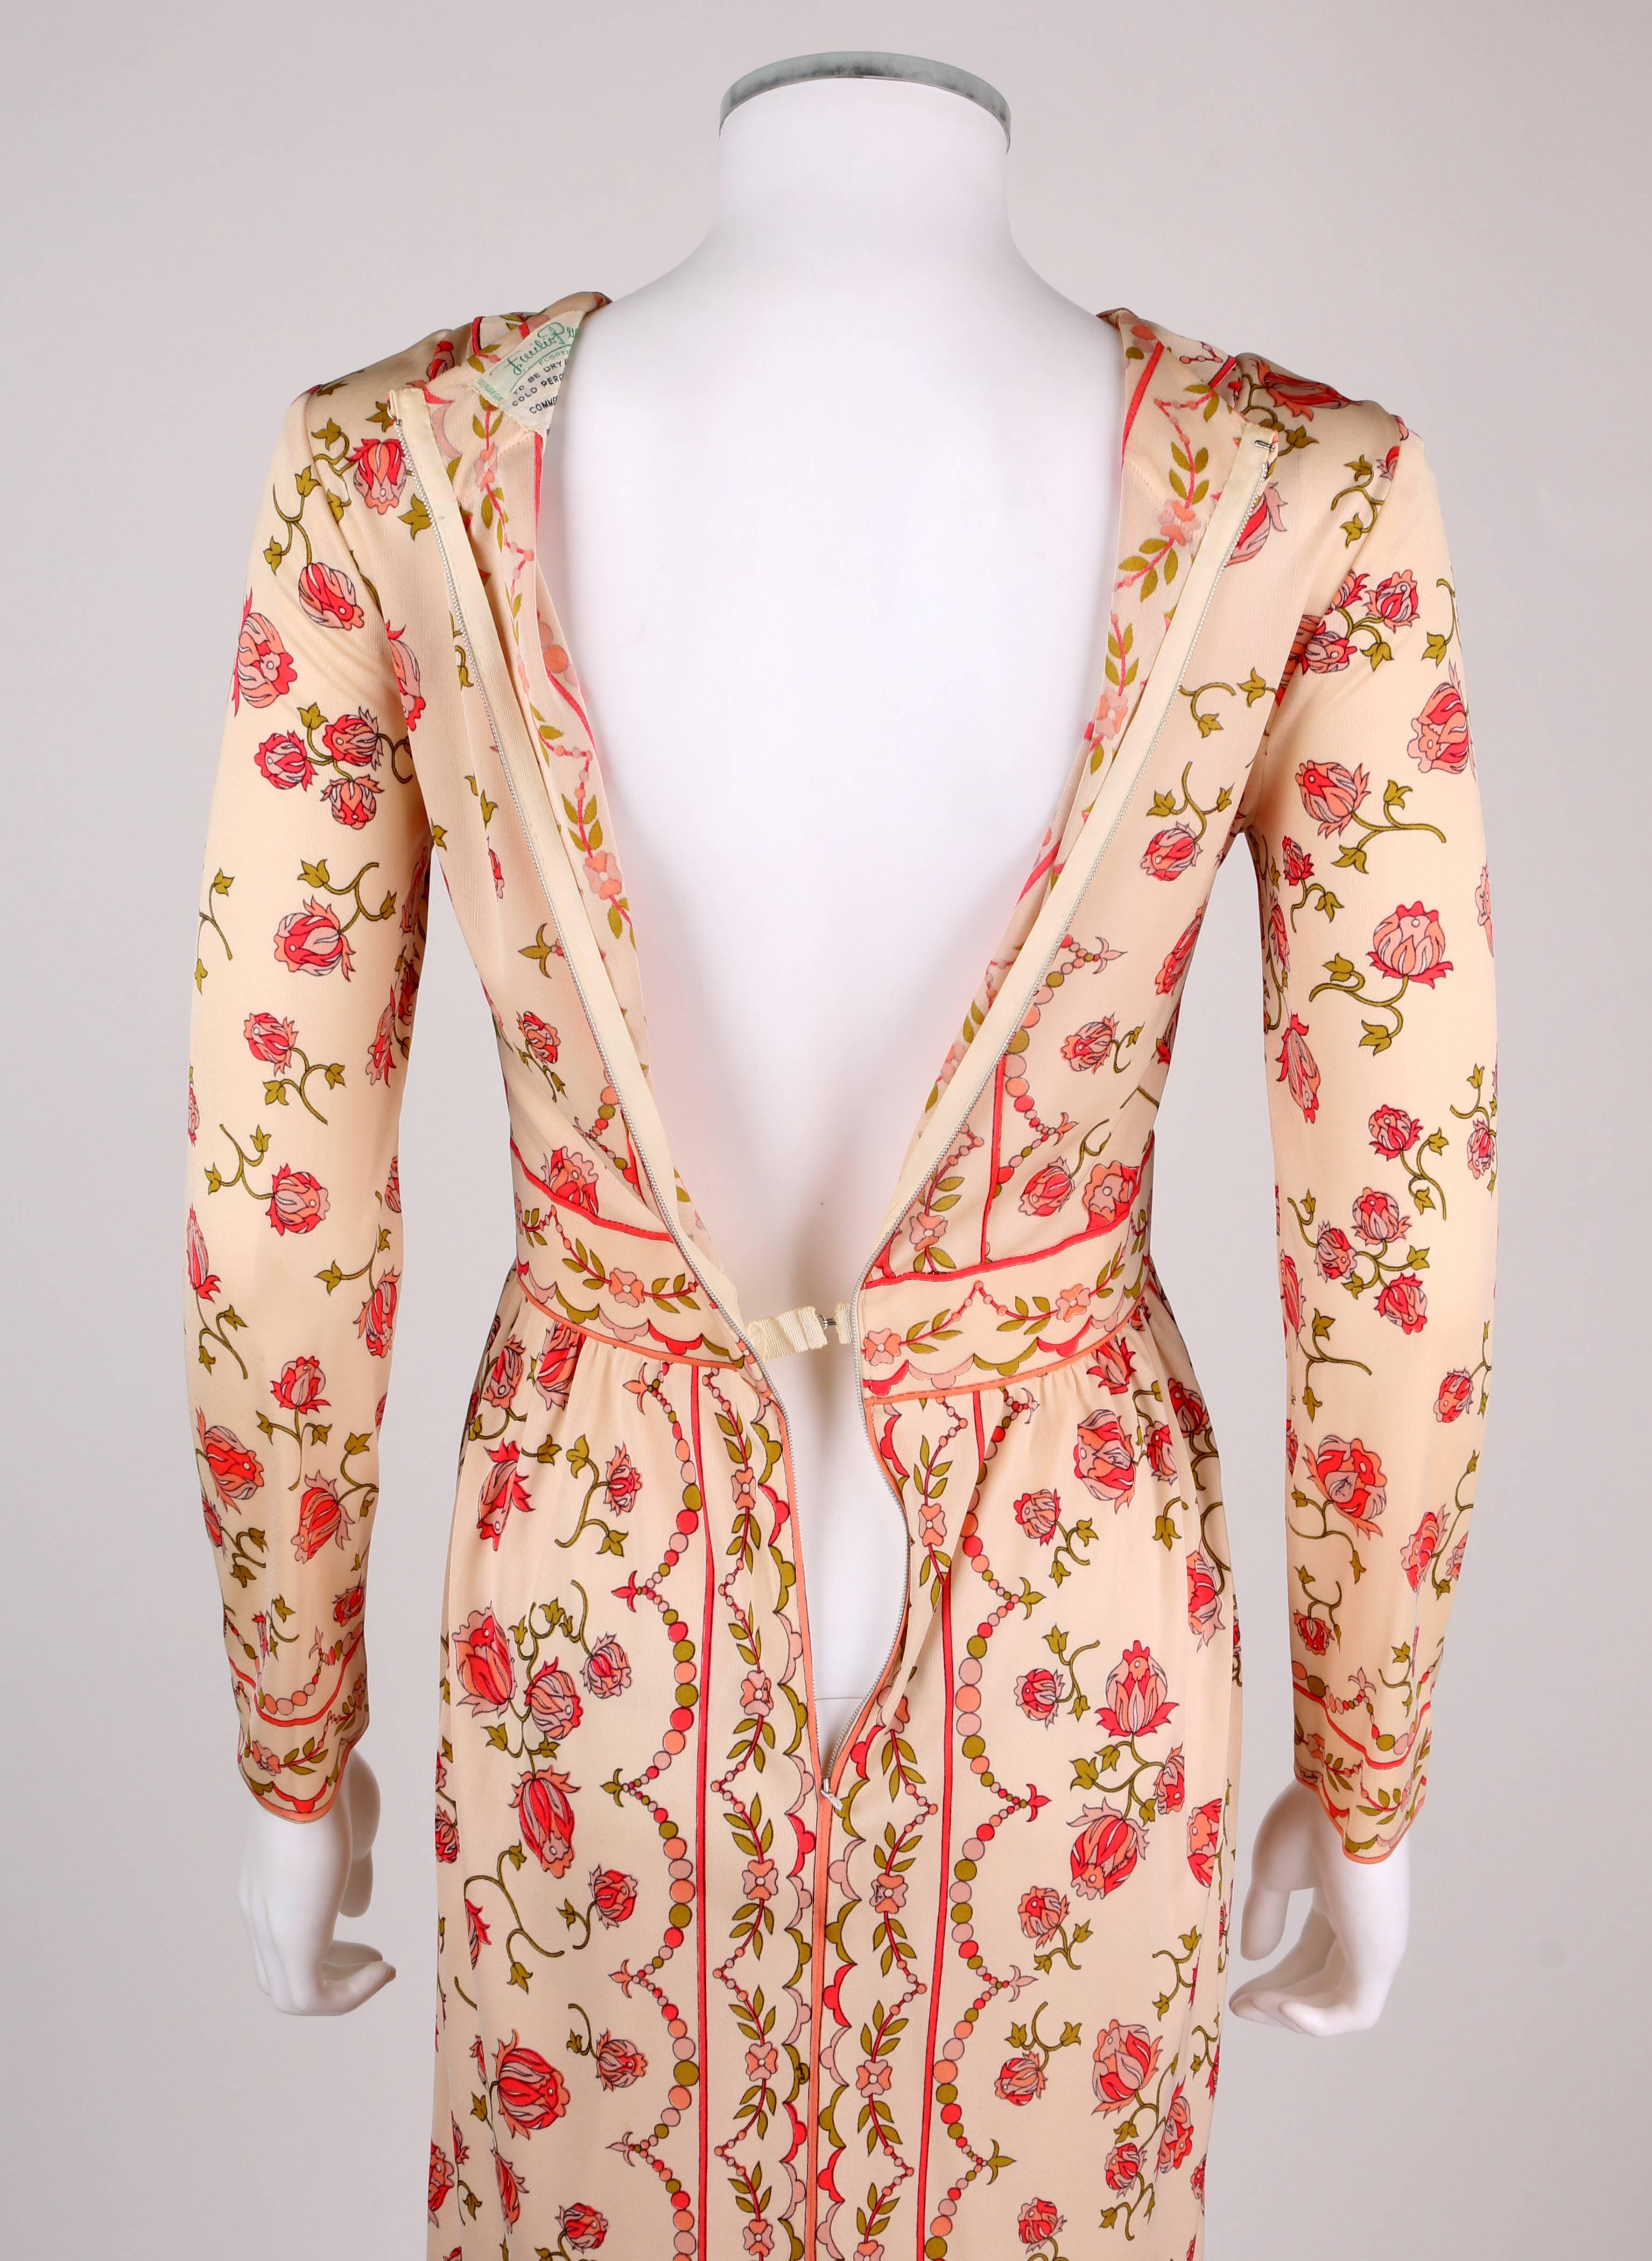 EMILIO PUCCI c..1970’s Signature Print Floral Rose Silk Long Sleeve Dress Size 8 2